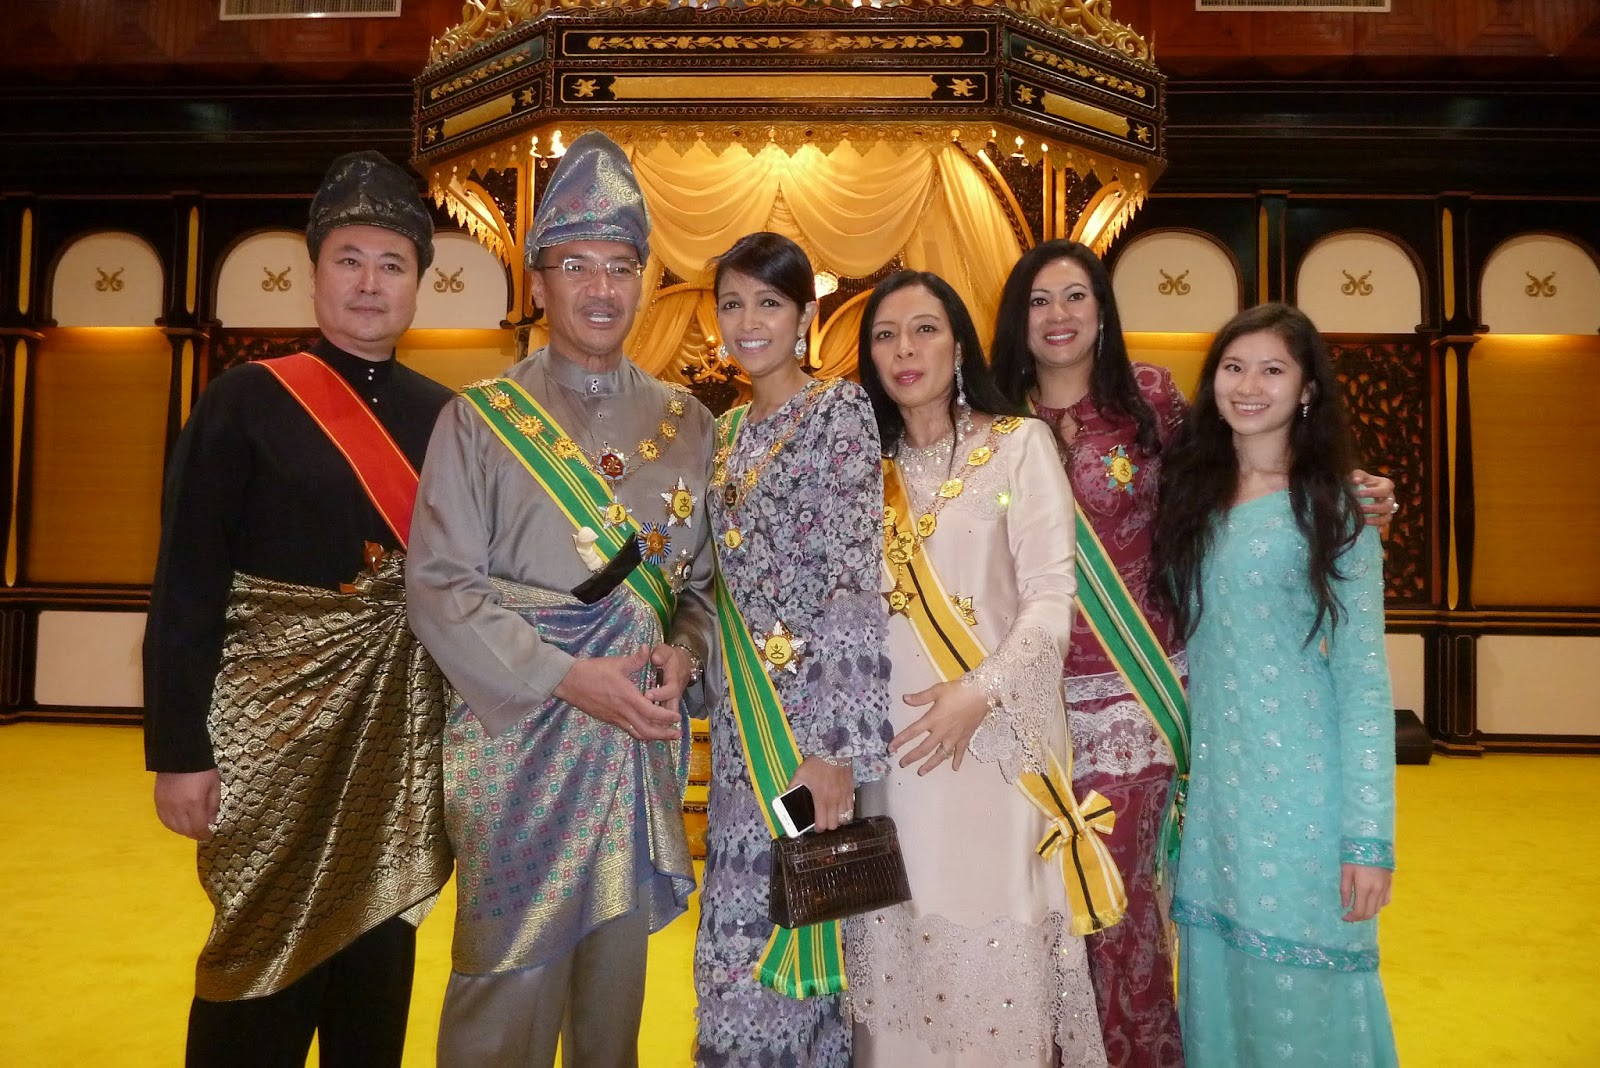 Tengku Marsilla Tengku Abdullah : A double celebration was in store as